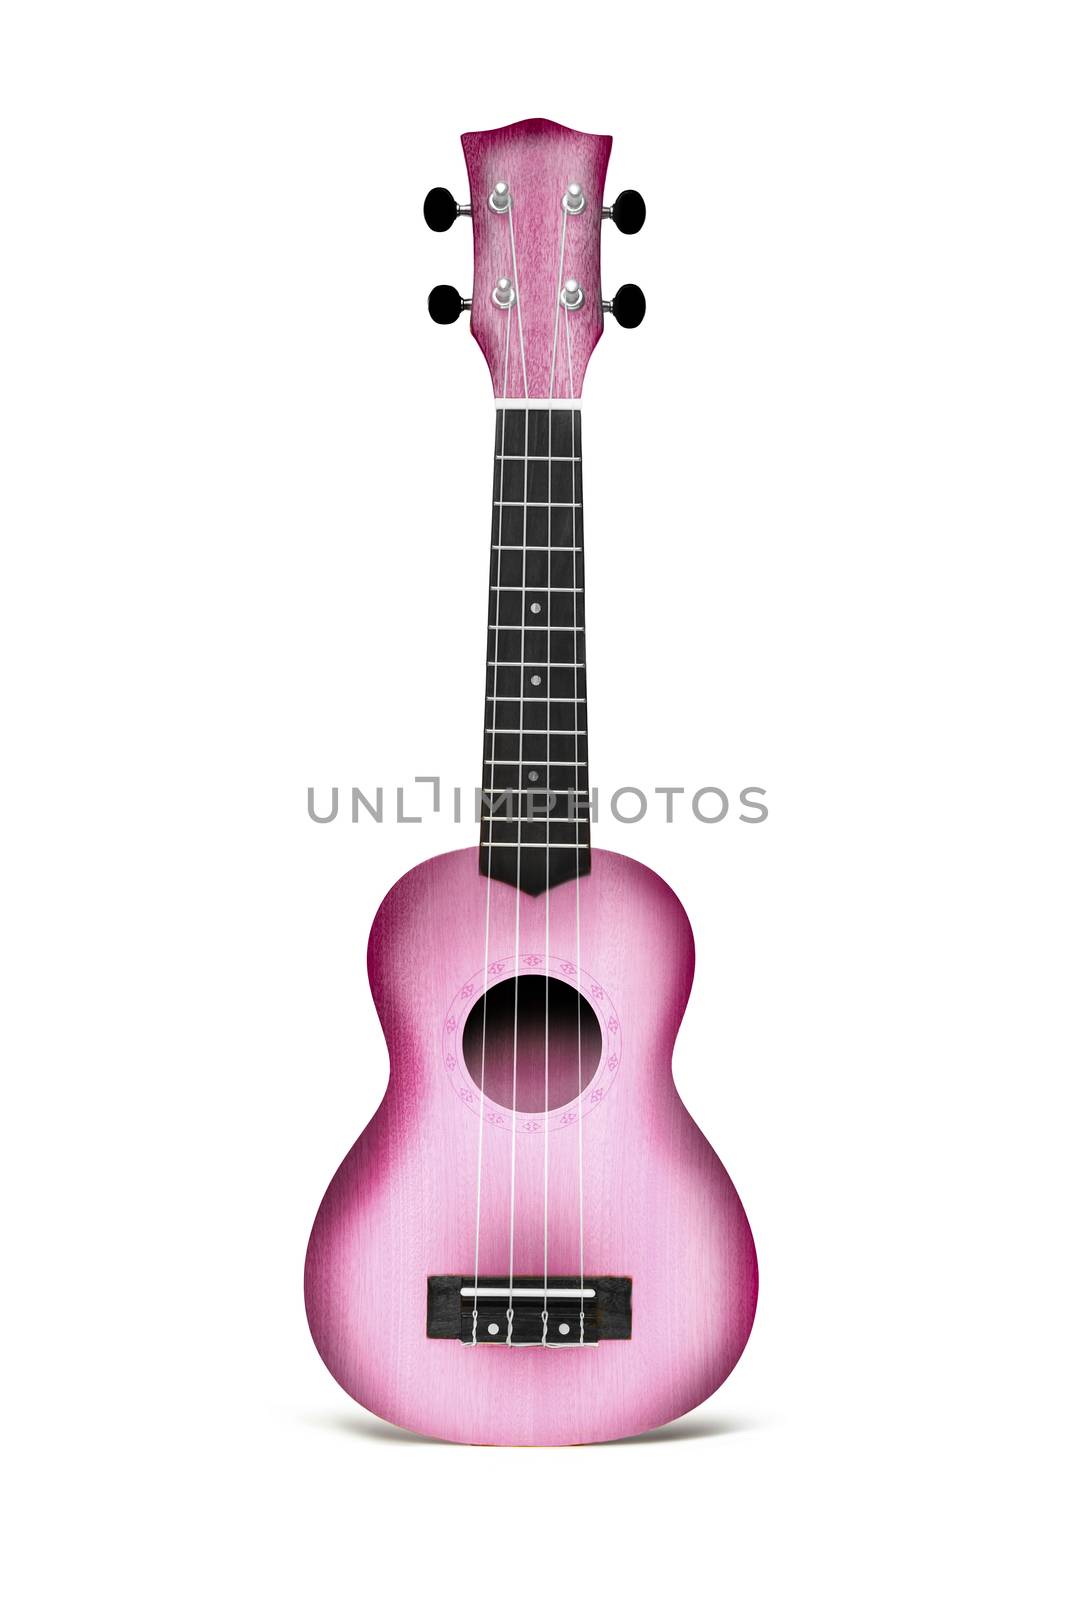 The pink ukulele guitar by SlayCer